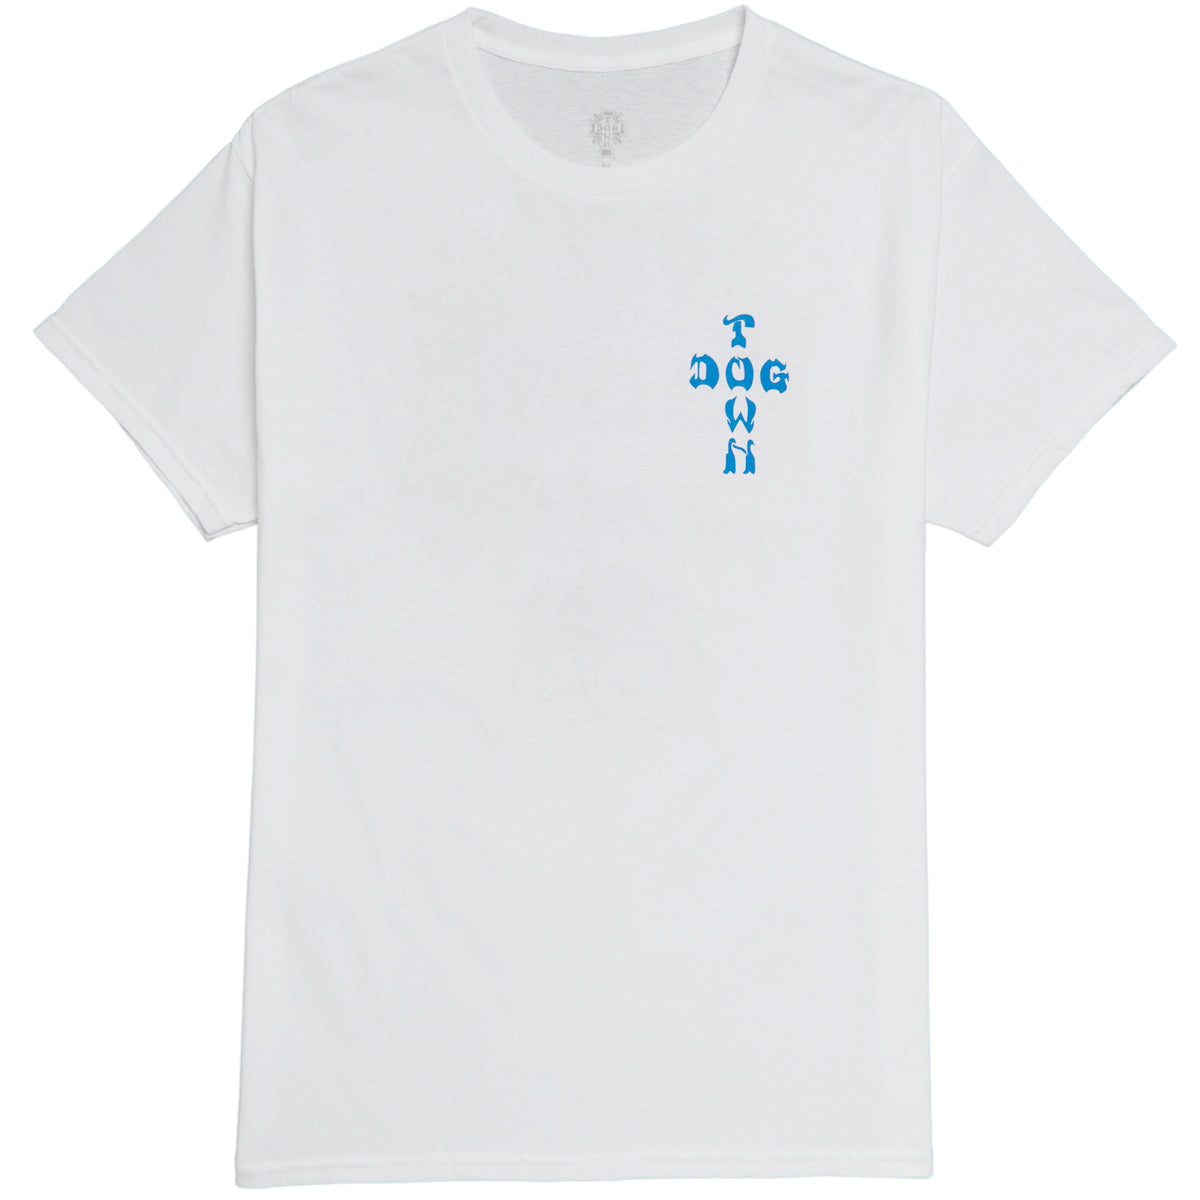 Dogtown Cross Logo T-Shirt - White/Red/Blue/Grey image 2